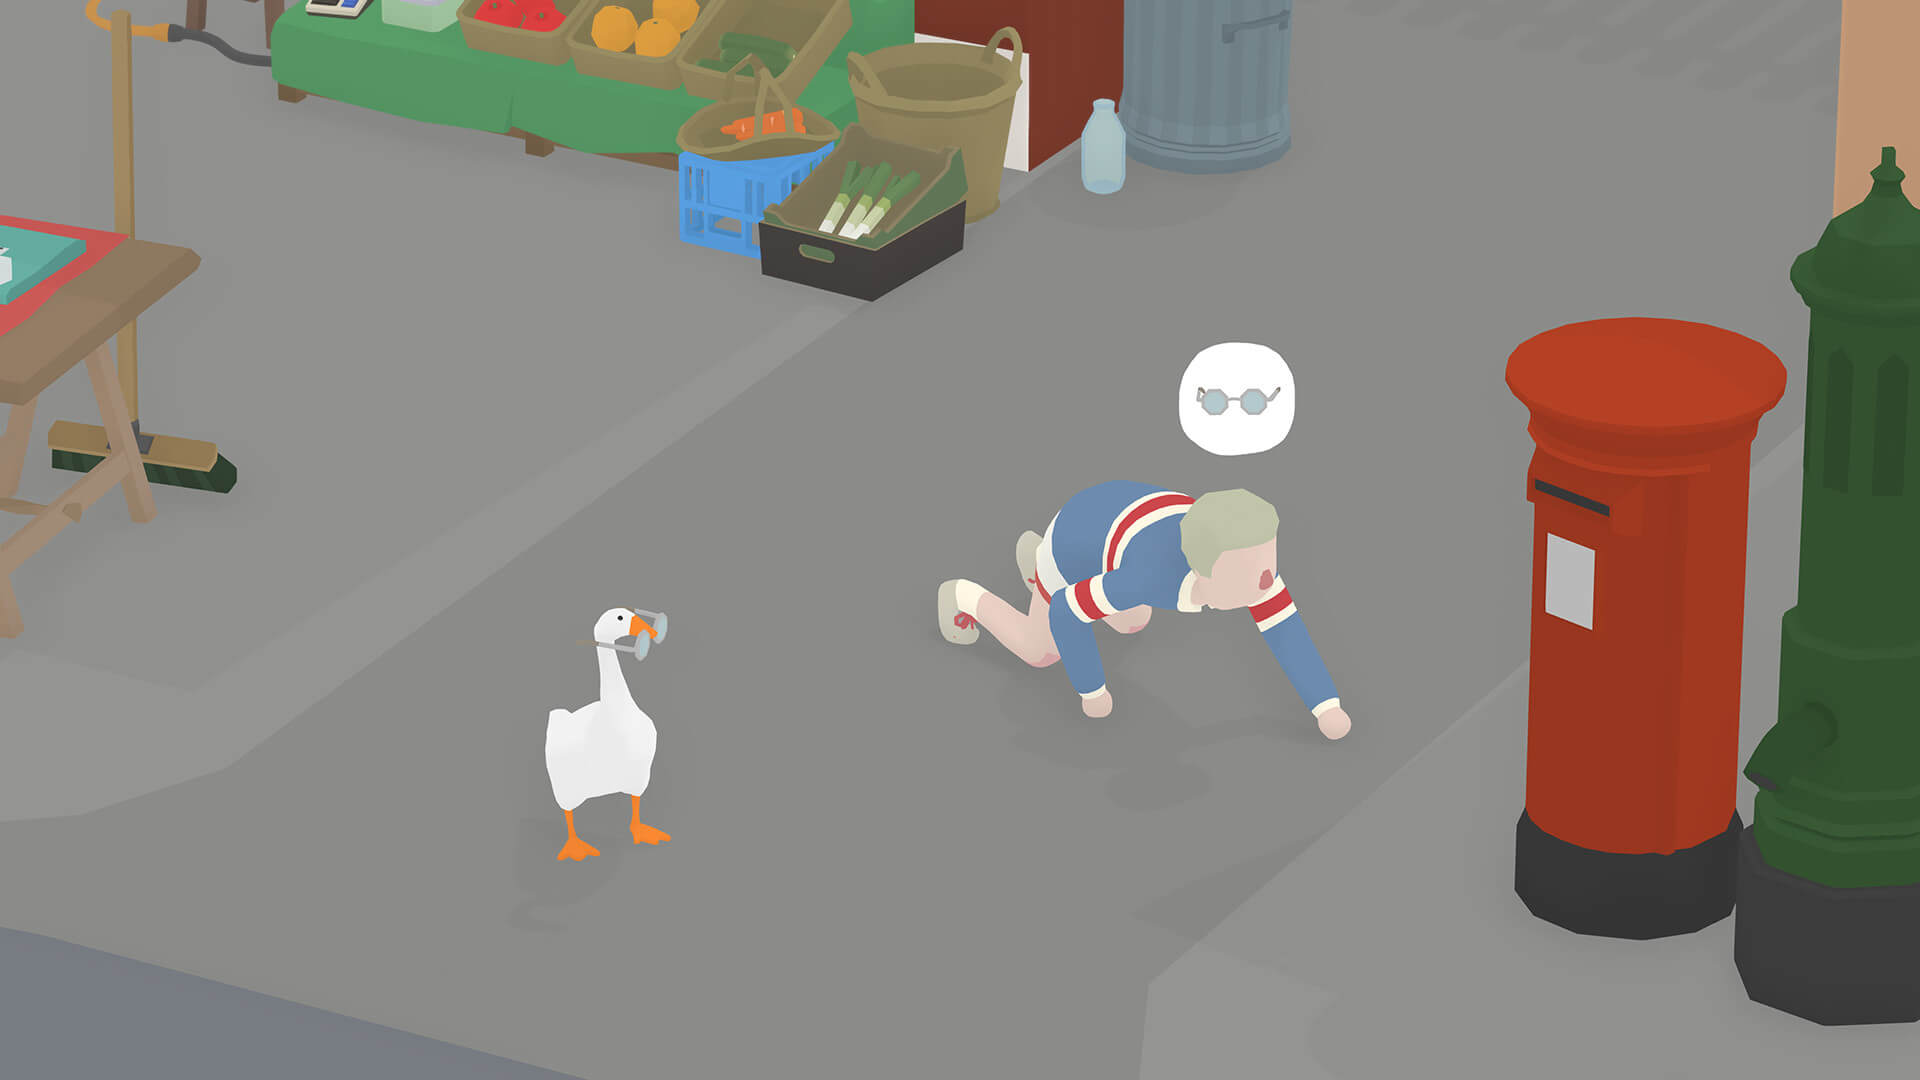 Untitled Goose Game скриншот (фото)